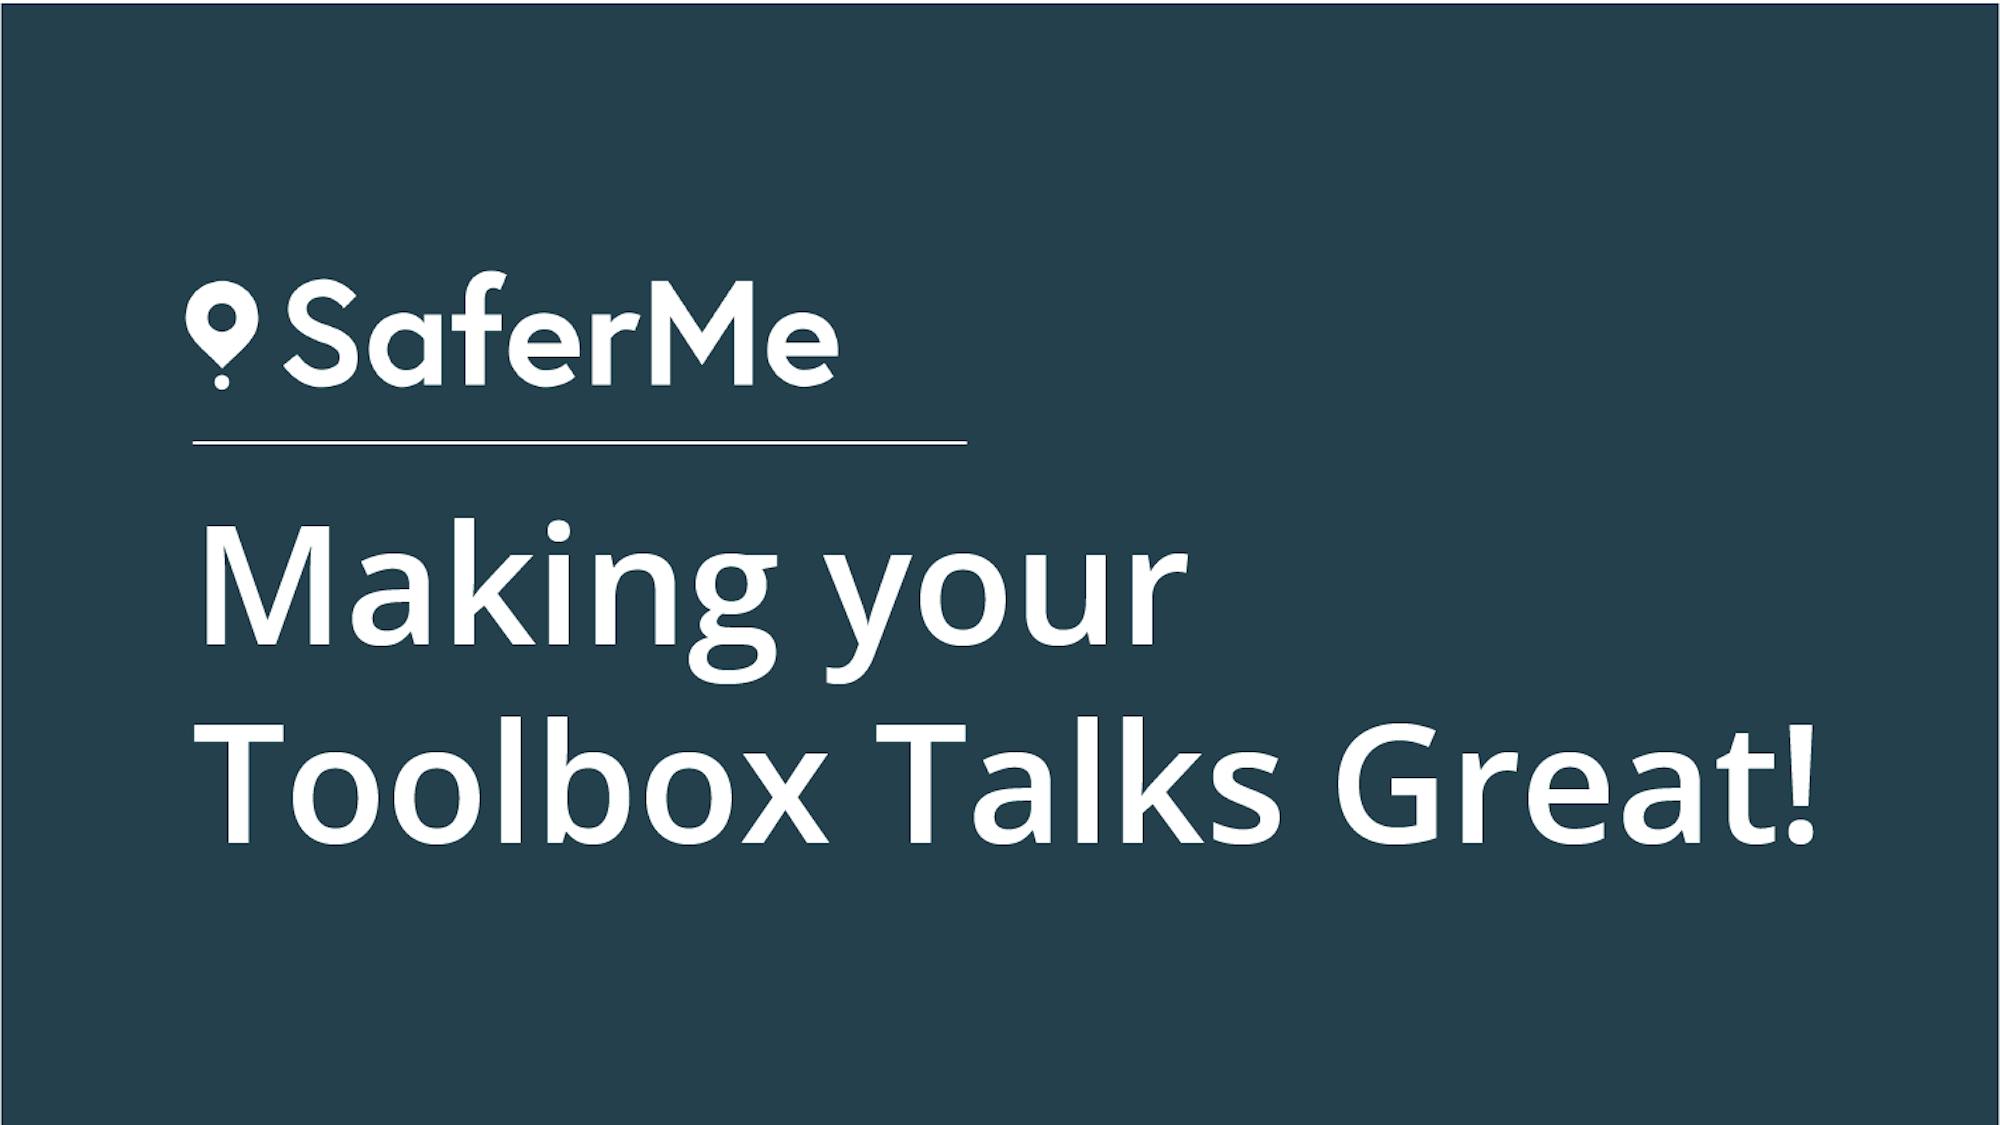 Toolbox Talk Examples